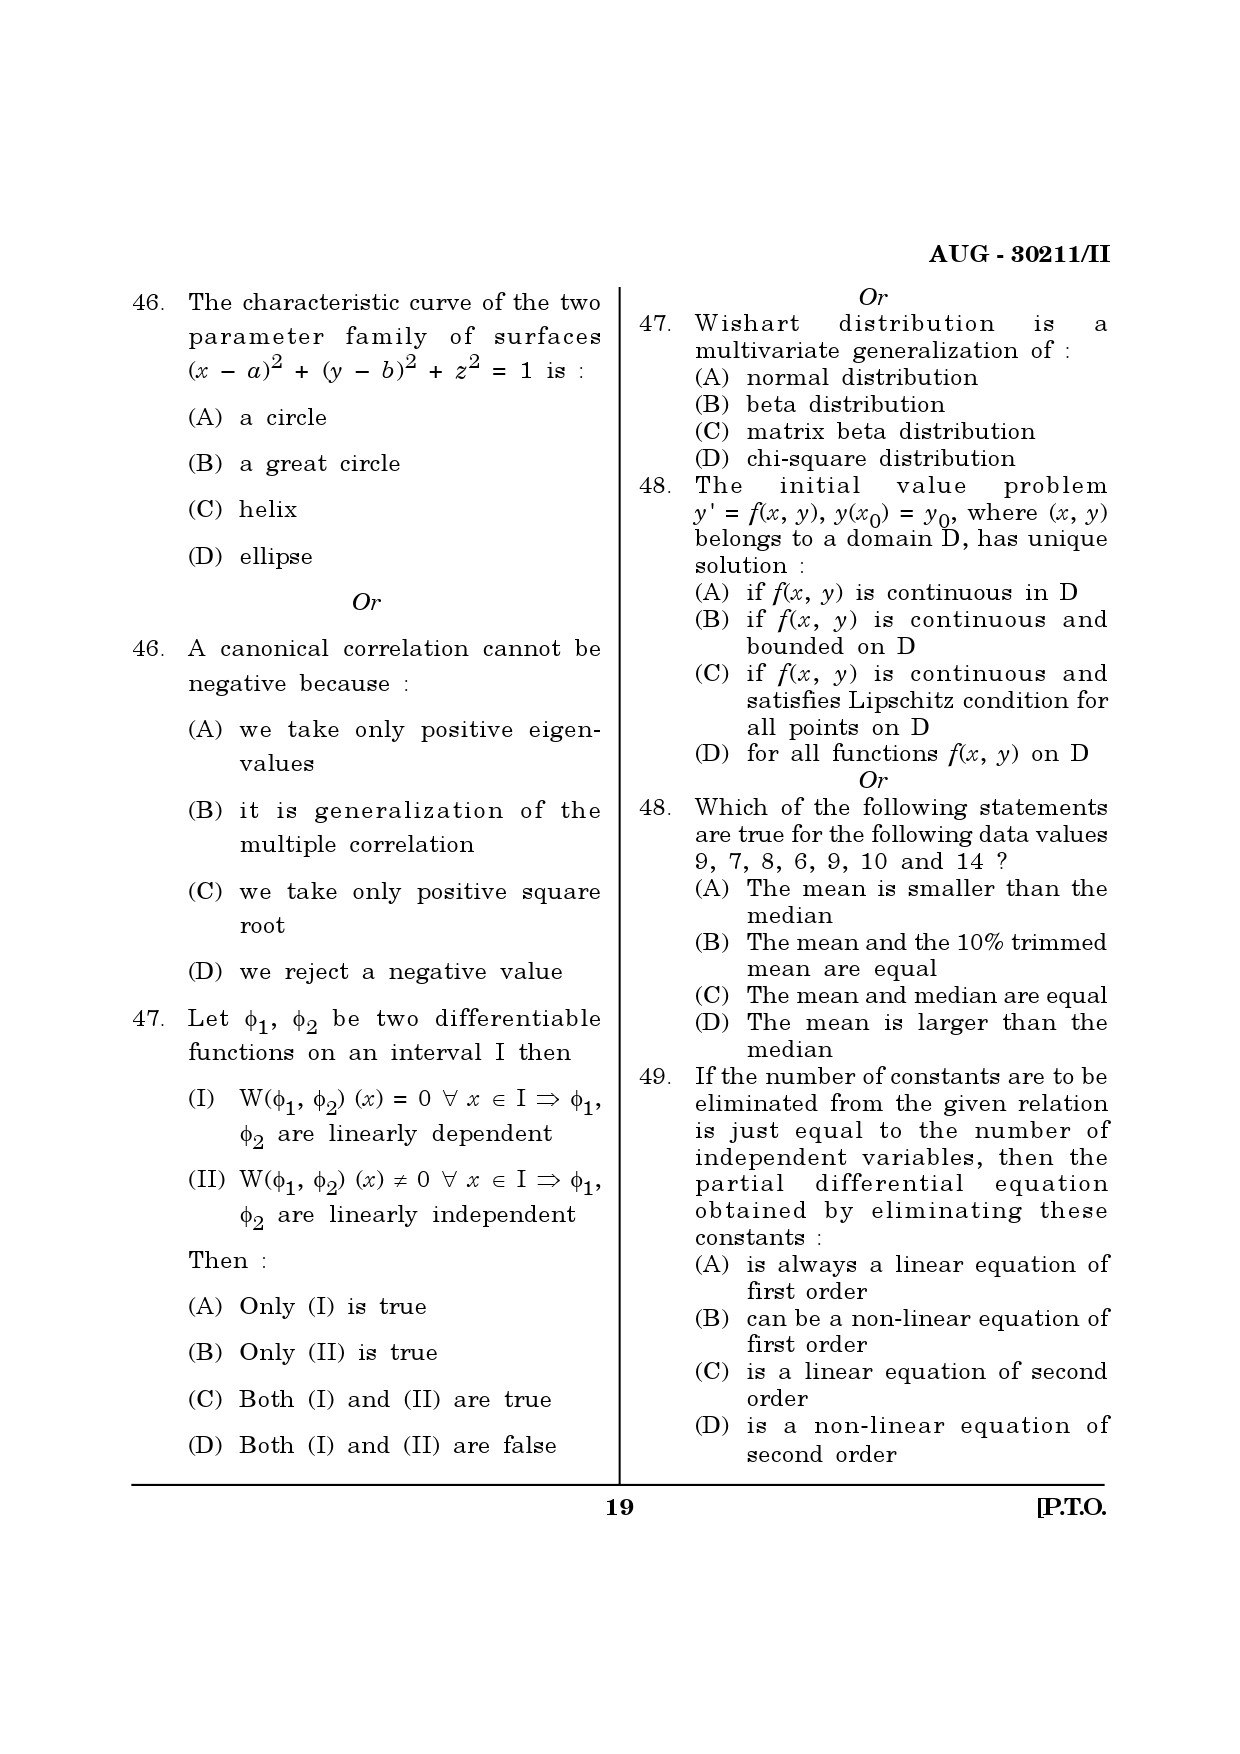 Maharashtra SET Mathematical Sciences Question Paper II August 2011 19